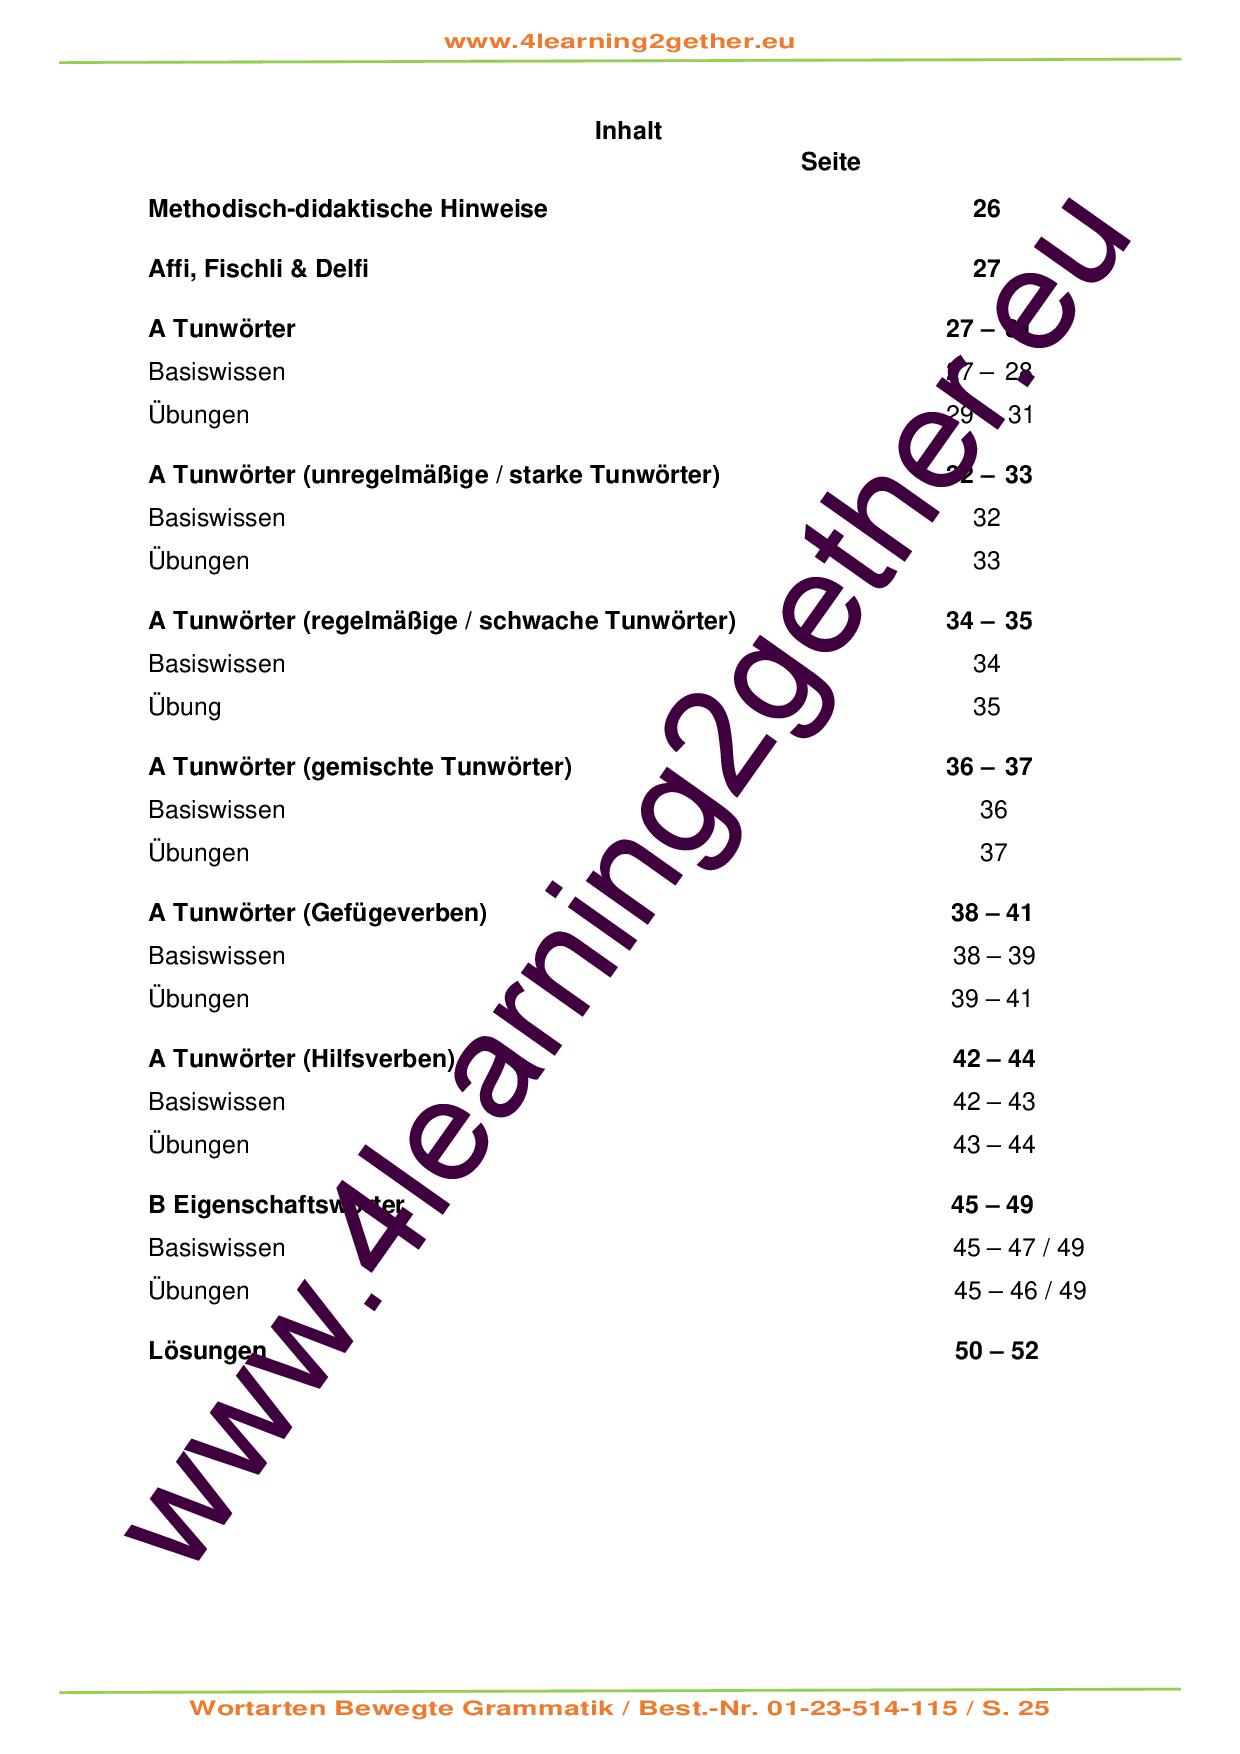 Wortarten - Bewegte Grammatik / Bearb. Word & PDF, 54 S., 7 - 9 J.,